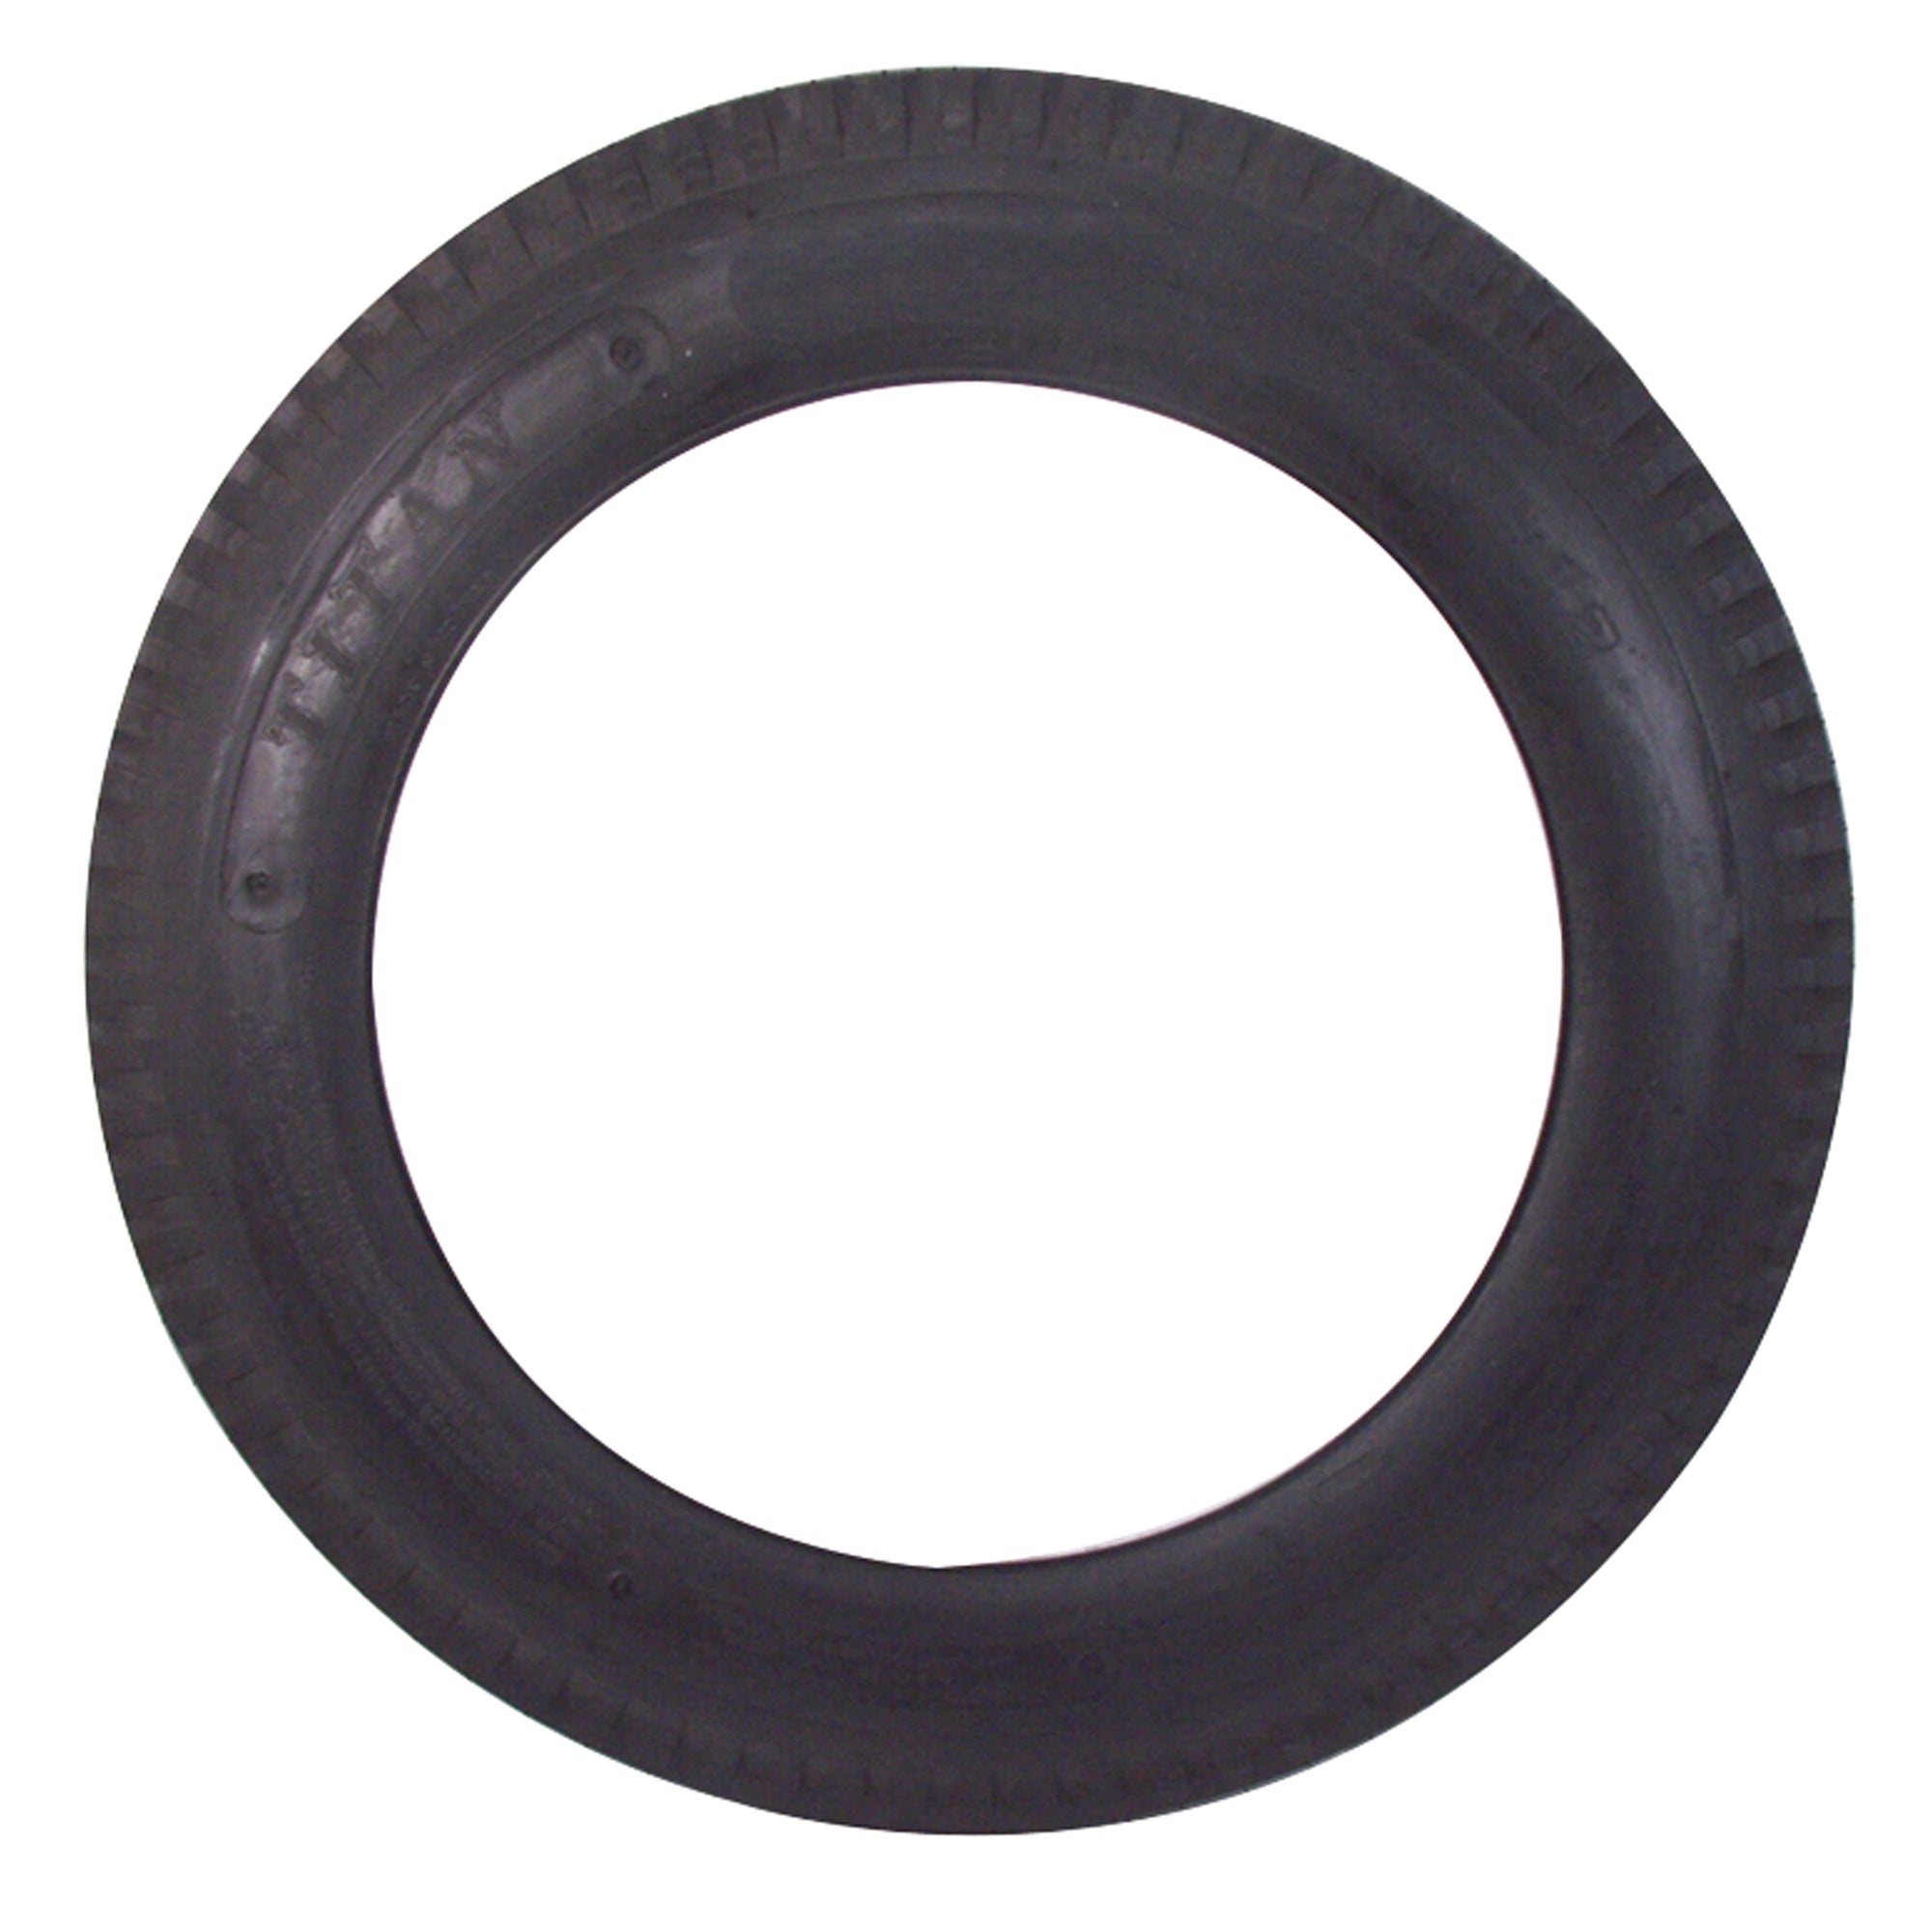 Tredit Tire & Wheel 724-865-519 Radial Tire Only - Endurance